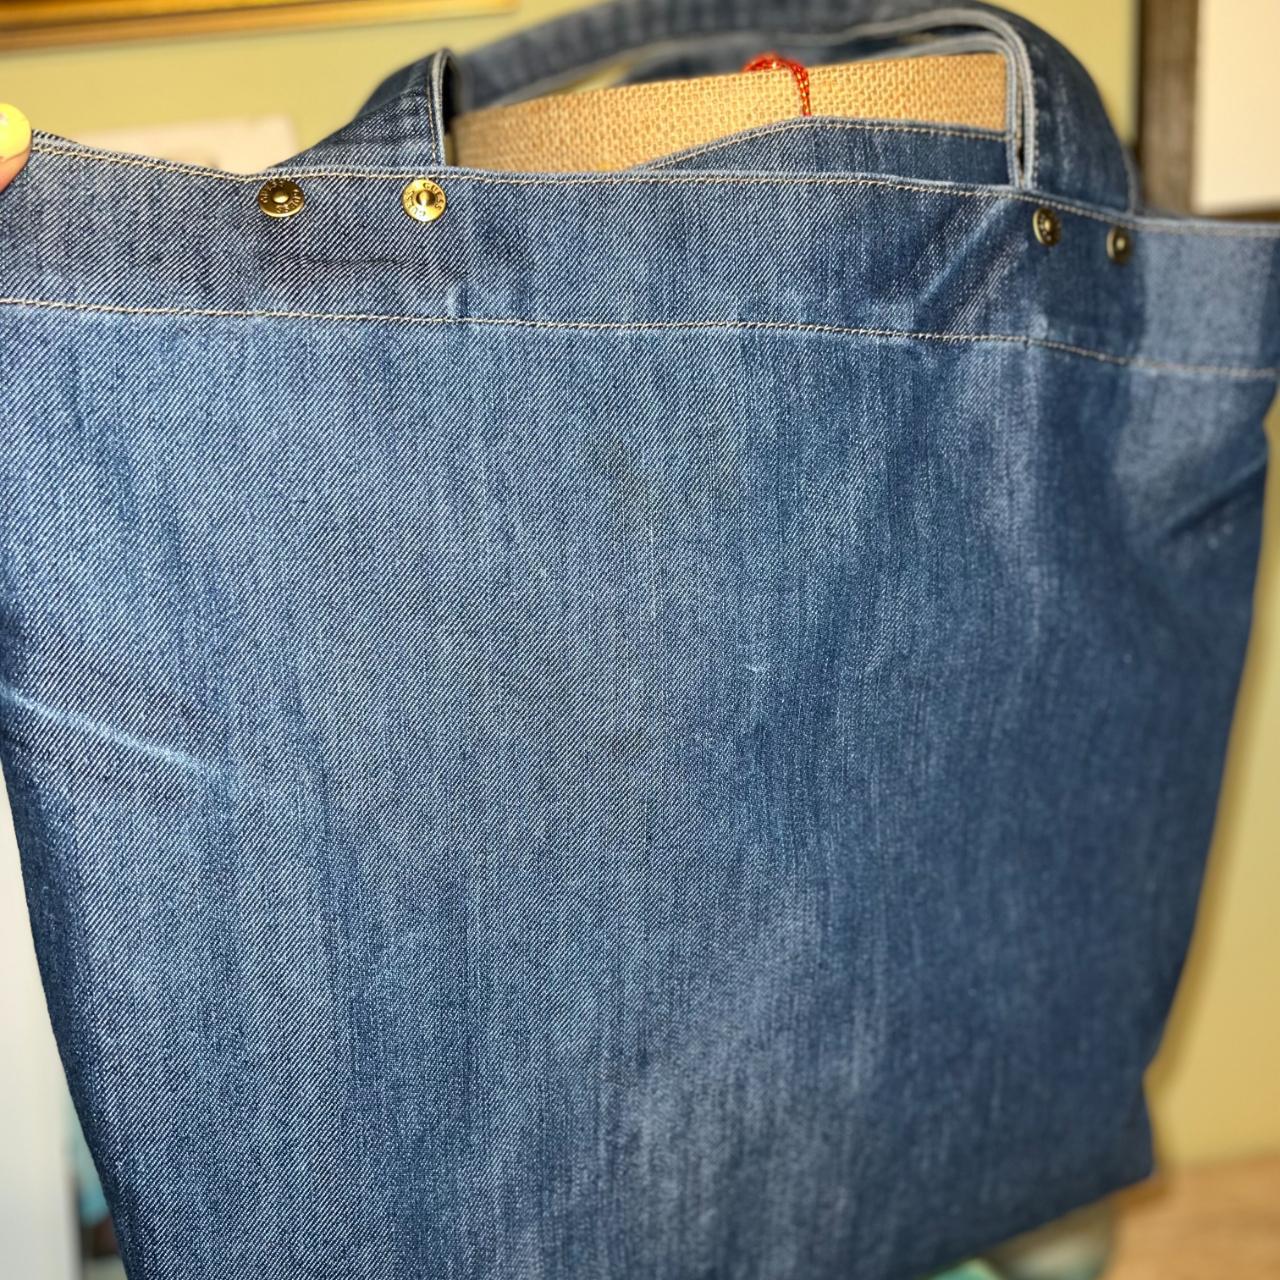 Vintage 1980s denim guess tote bag used condition - Depop